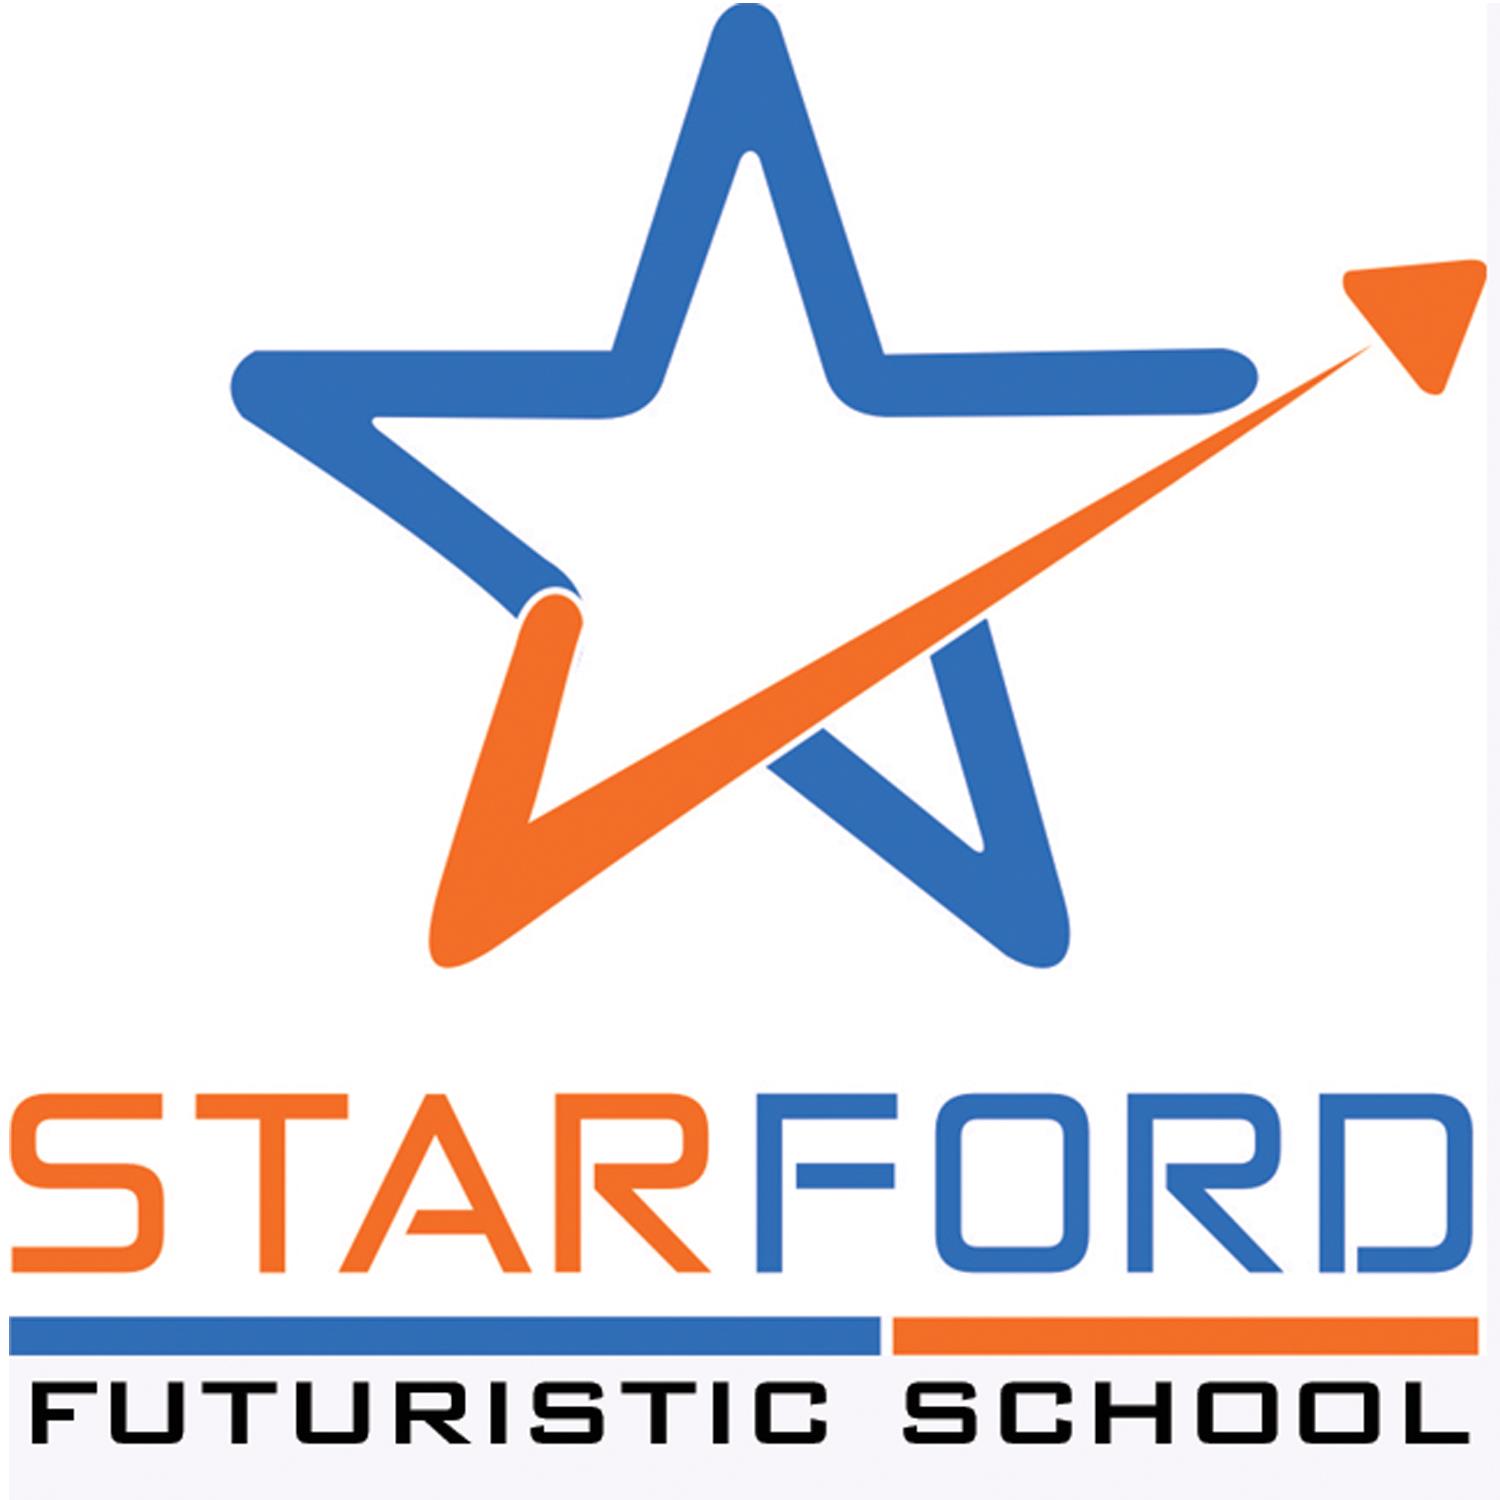 Starford School|Coaching Institute|Education